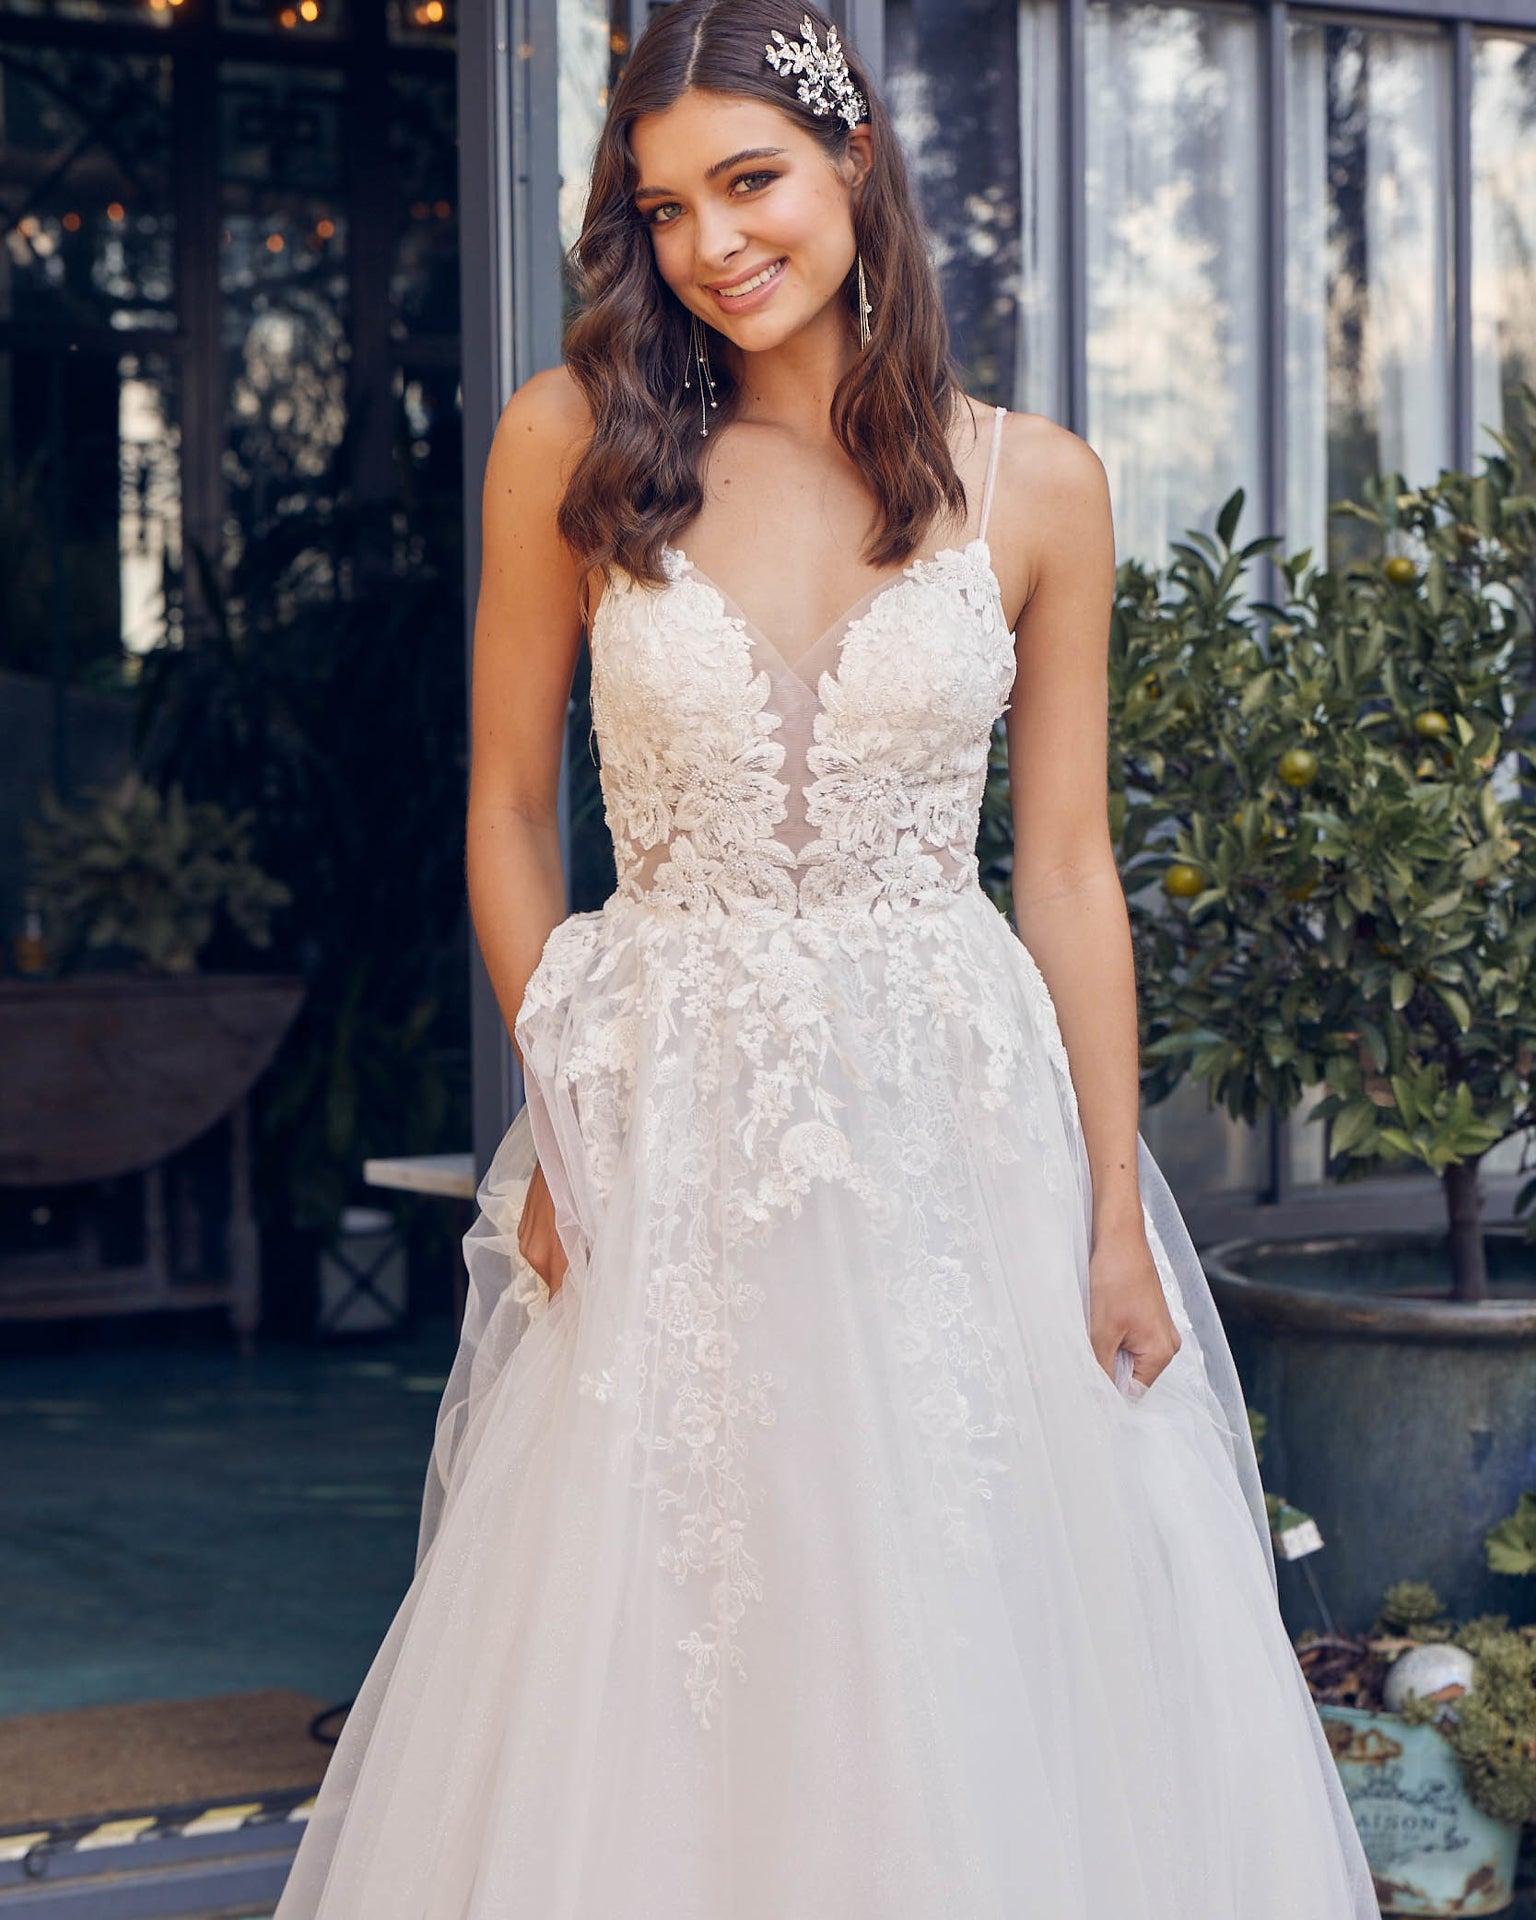 Embroidered Lace Bodice Open Back Long Wedding Dress NXJE933-Wedding Dress-smcfashion.com